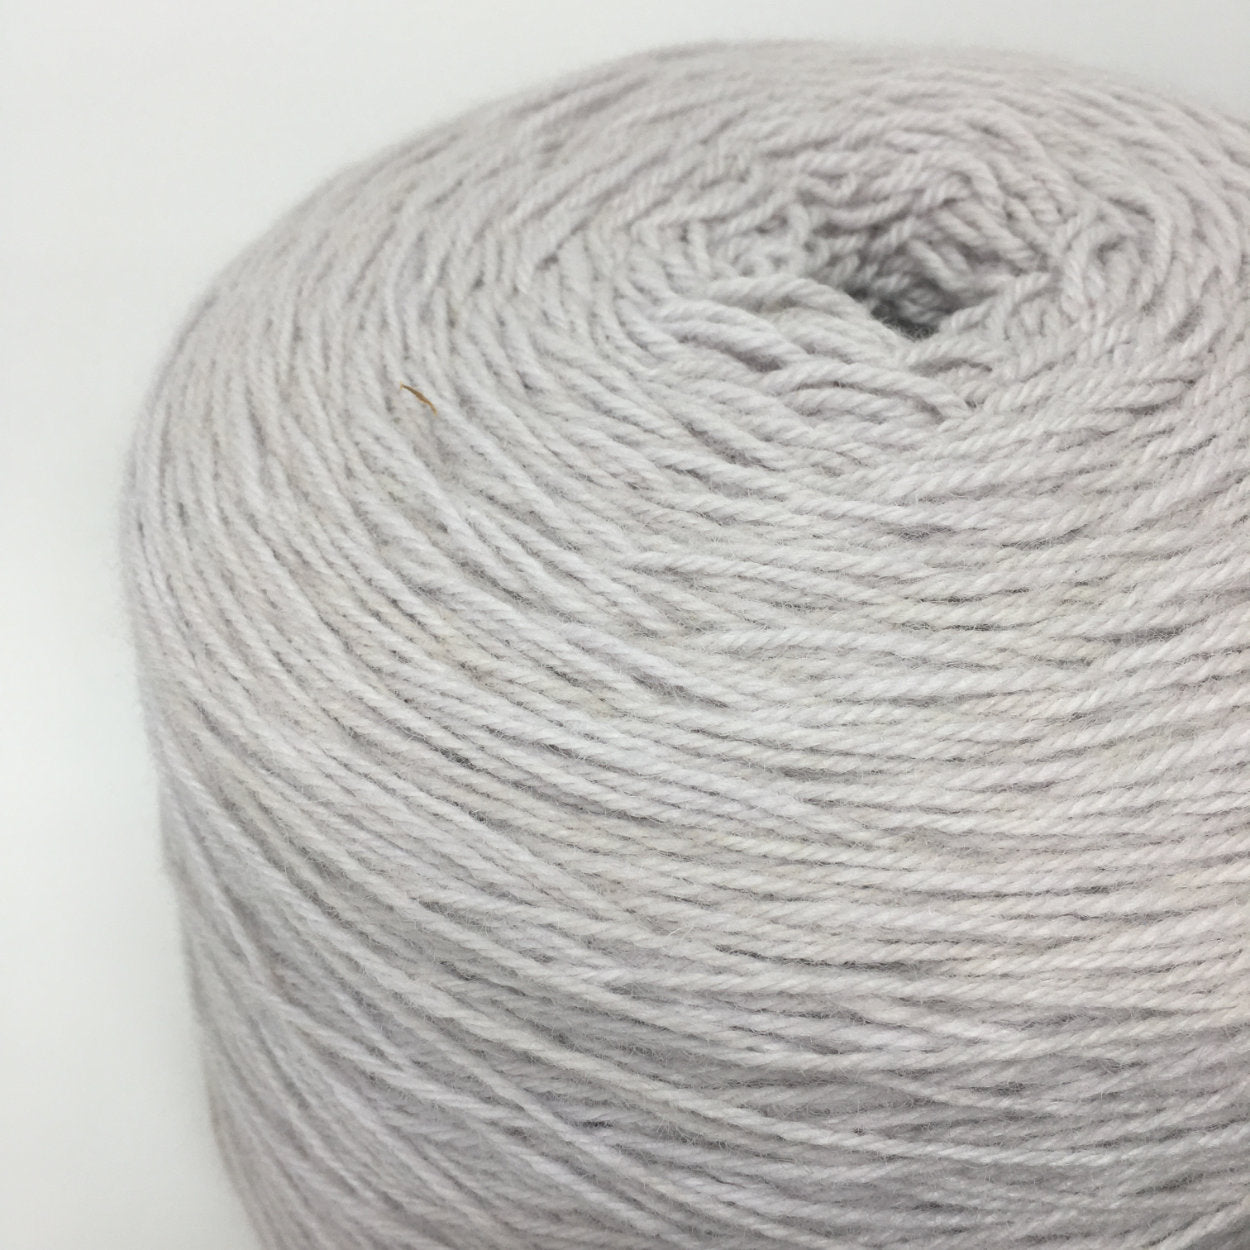 Tufting Yarn Bundle - 8lb | 100% Wool | Clearance Sale